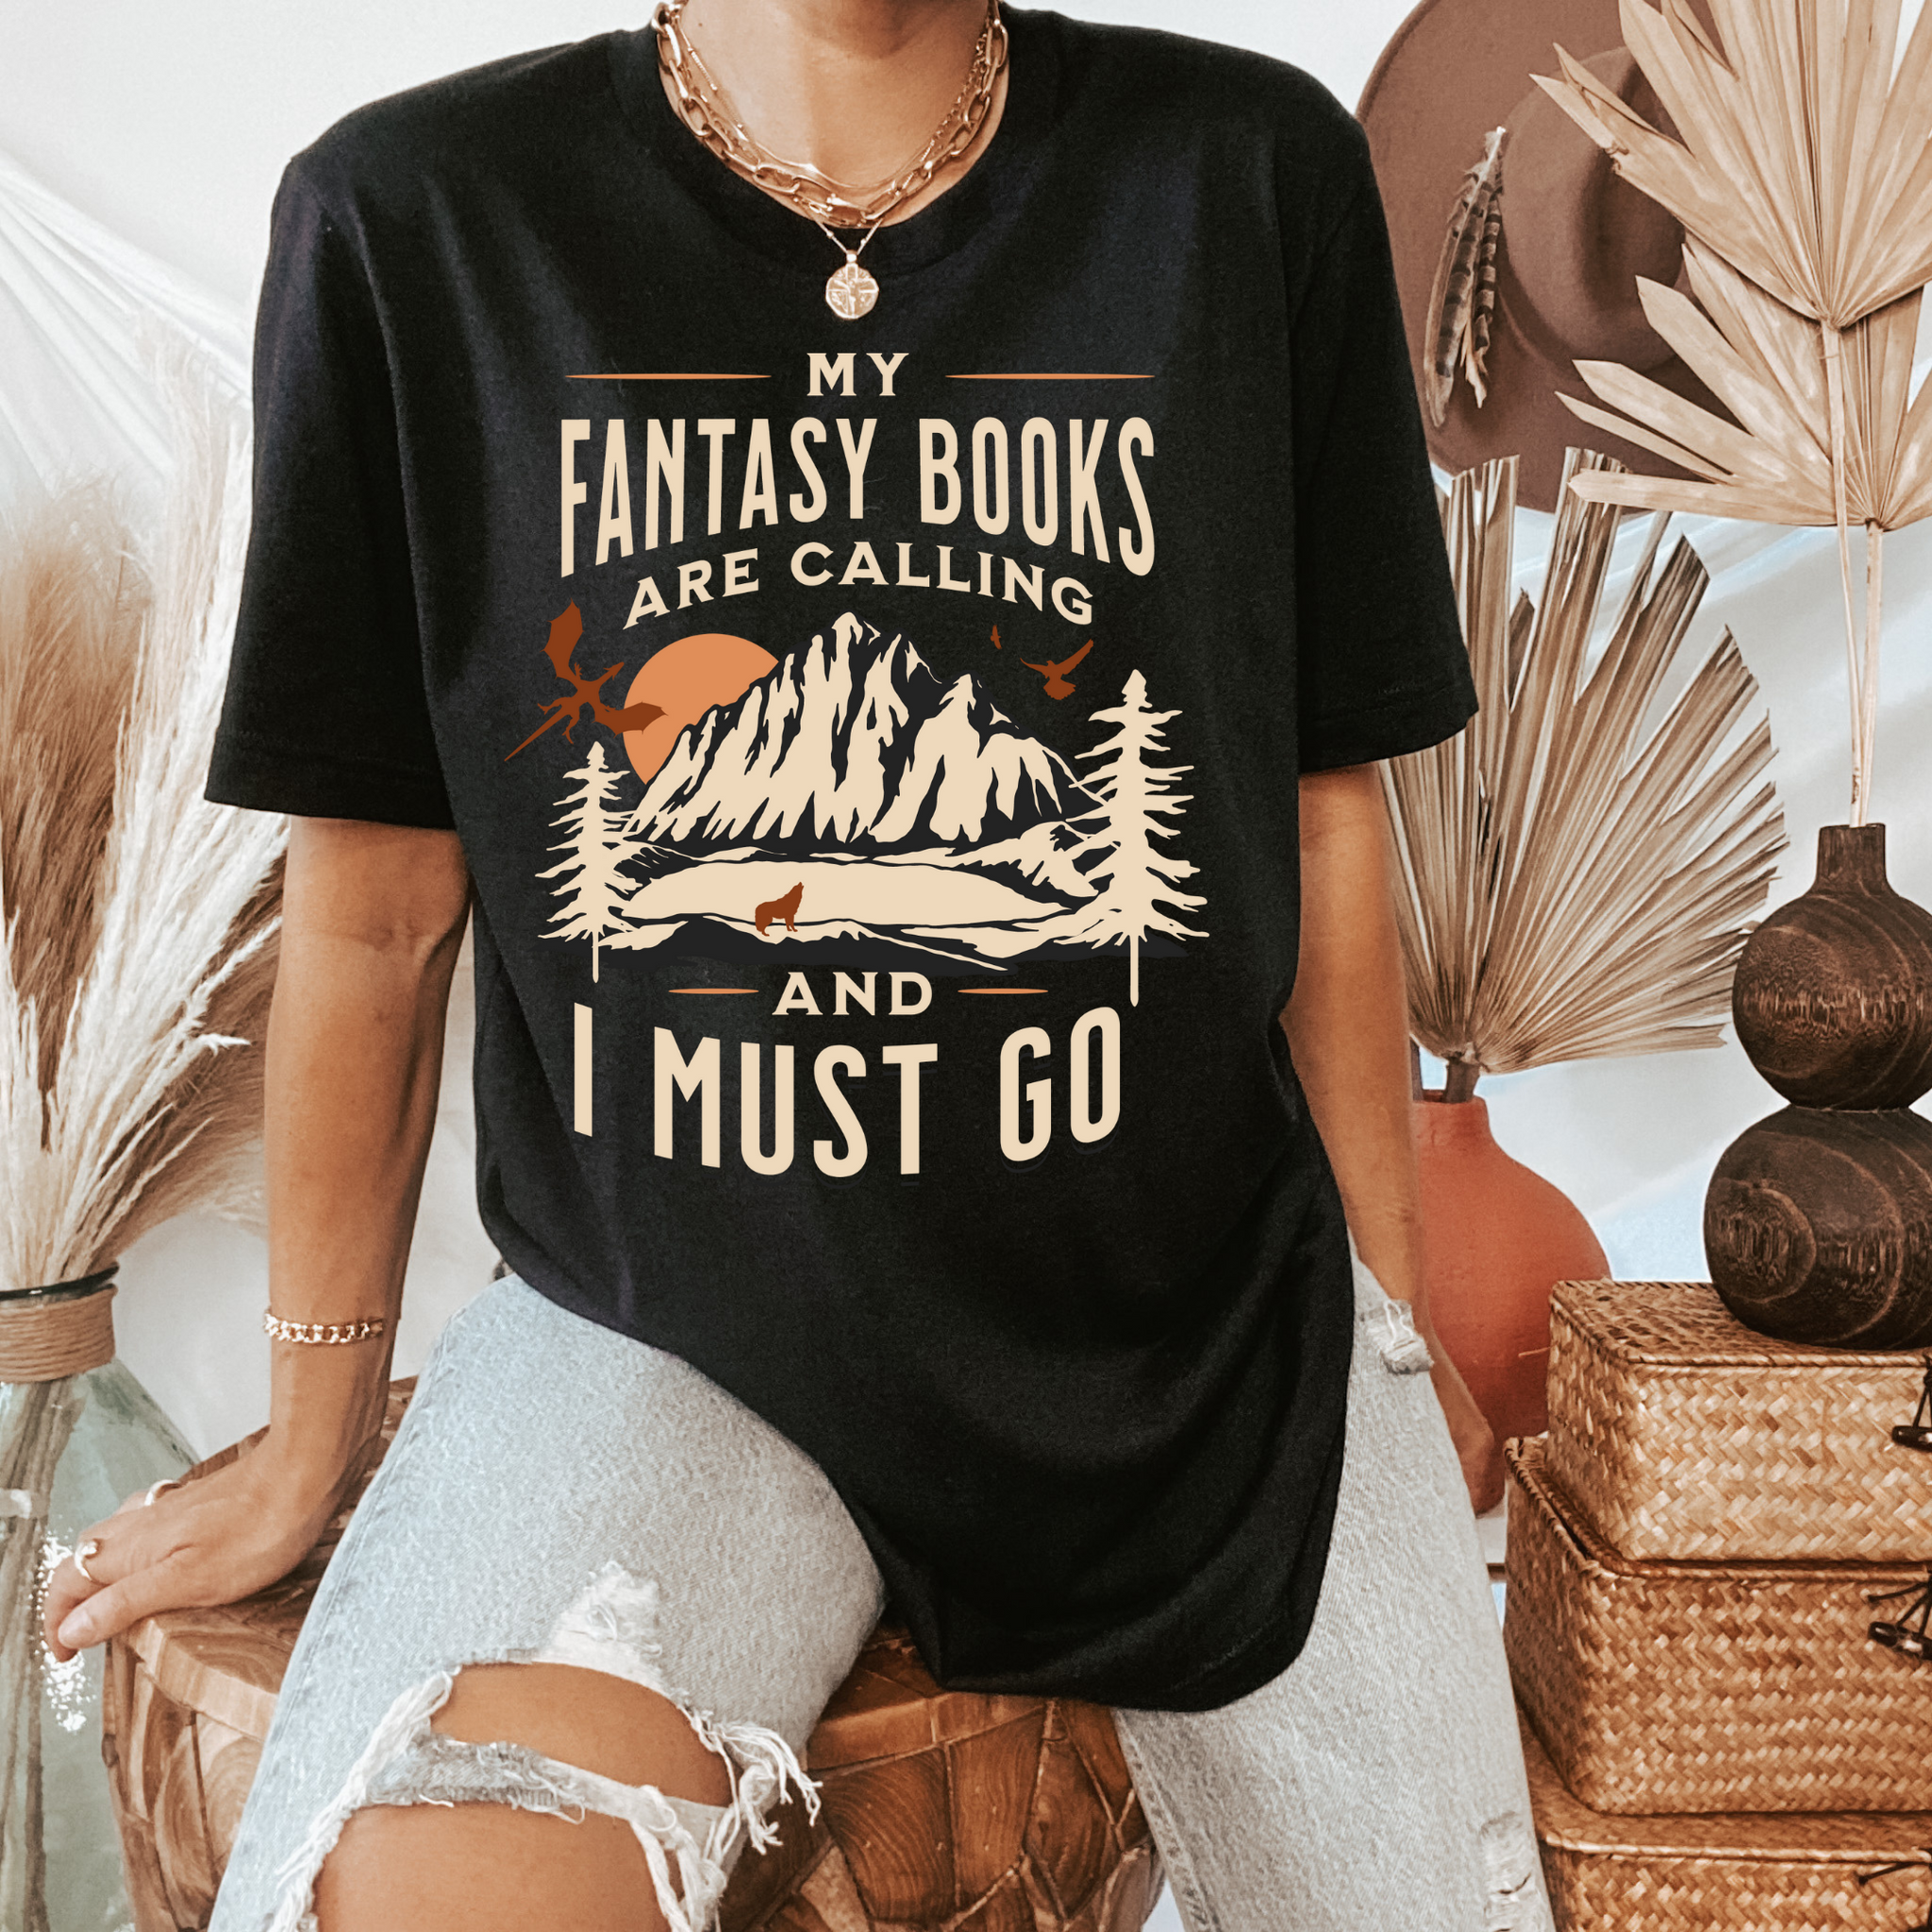 "My Fantasy Books" Bookish T-Shirt